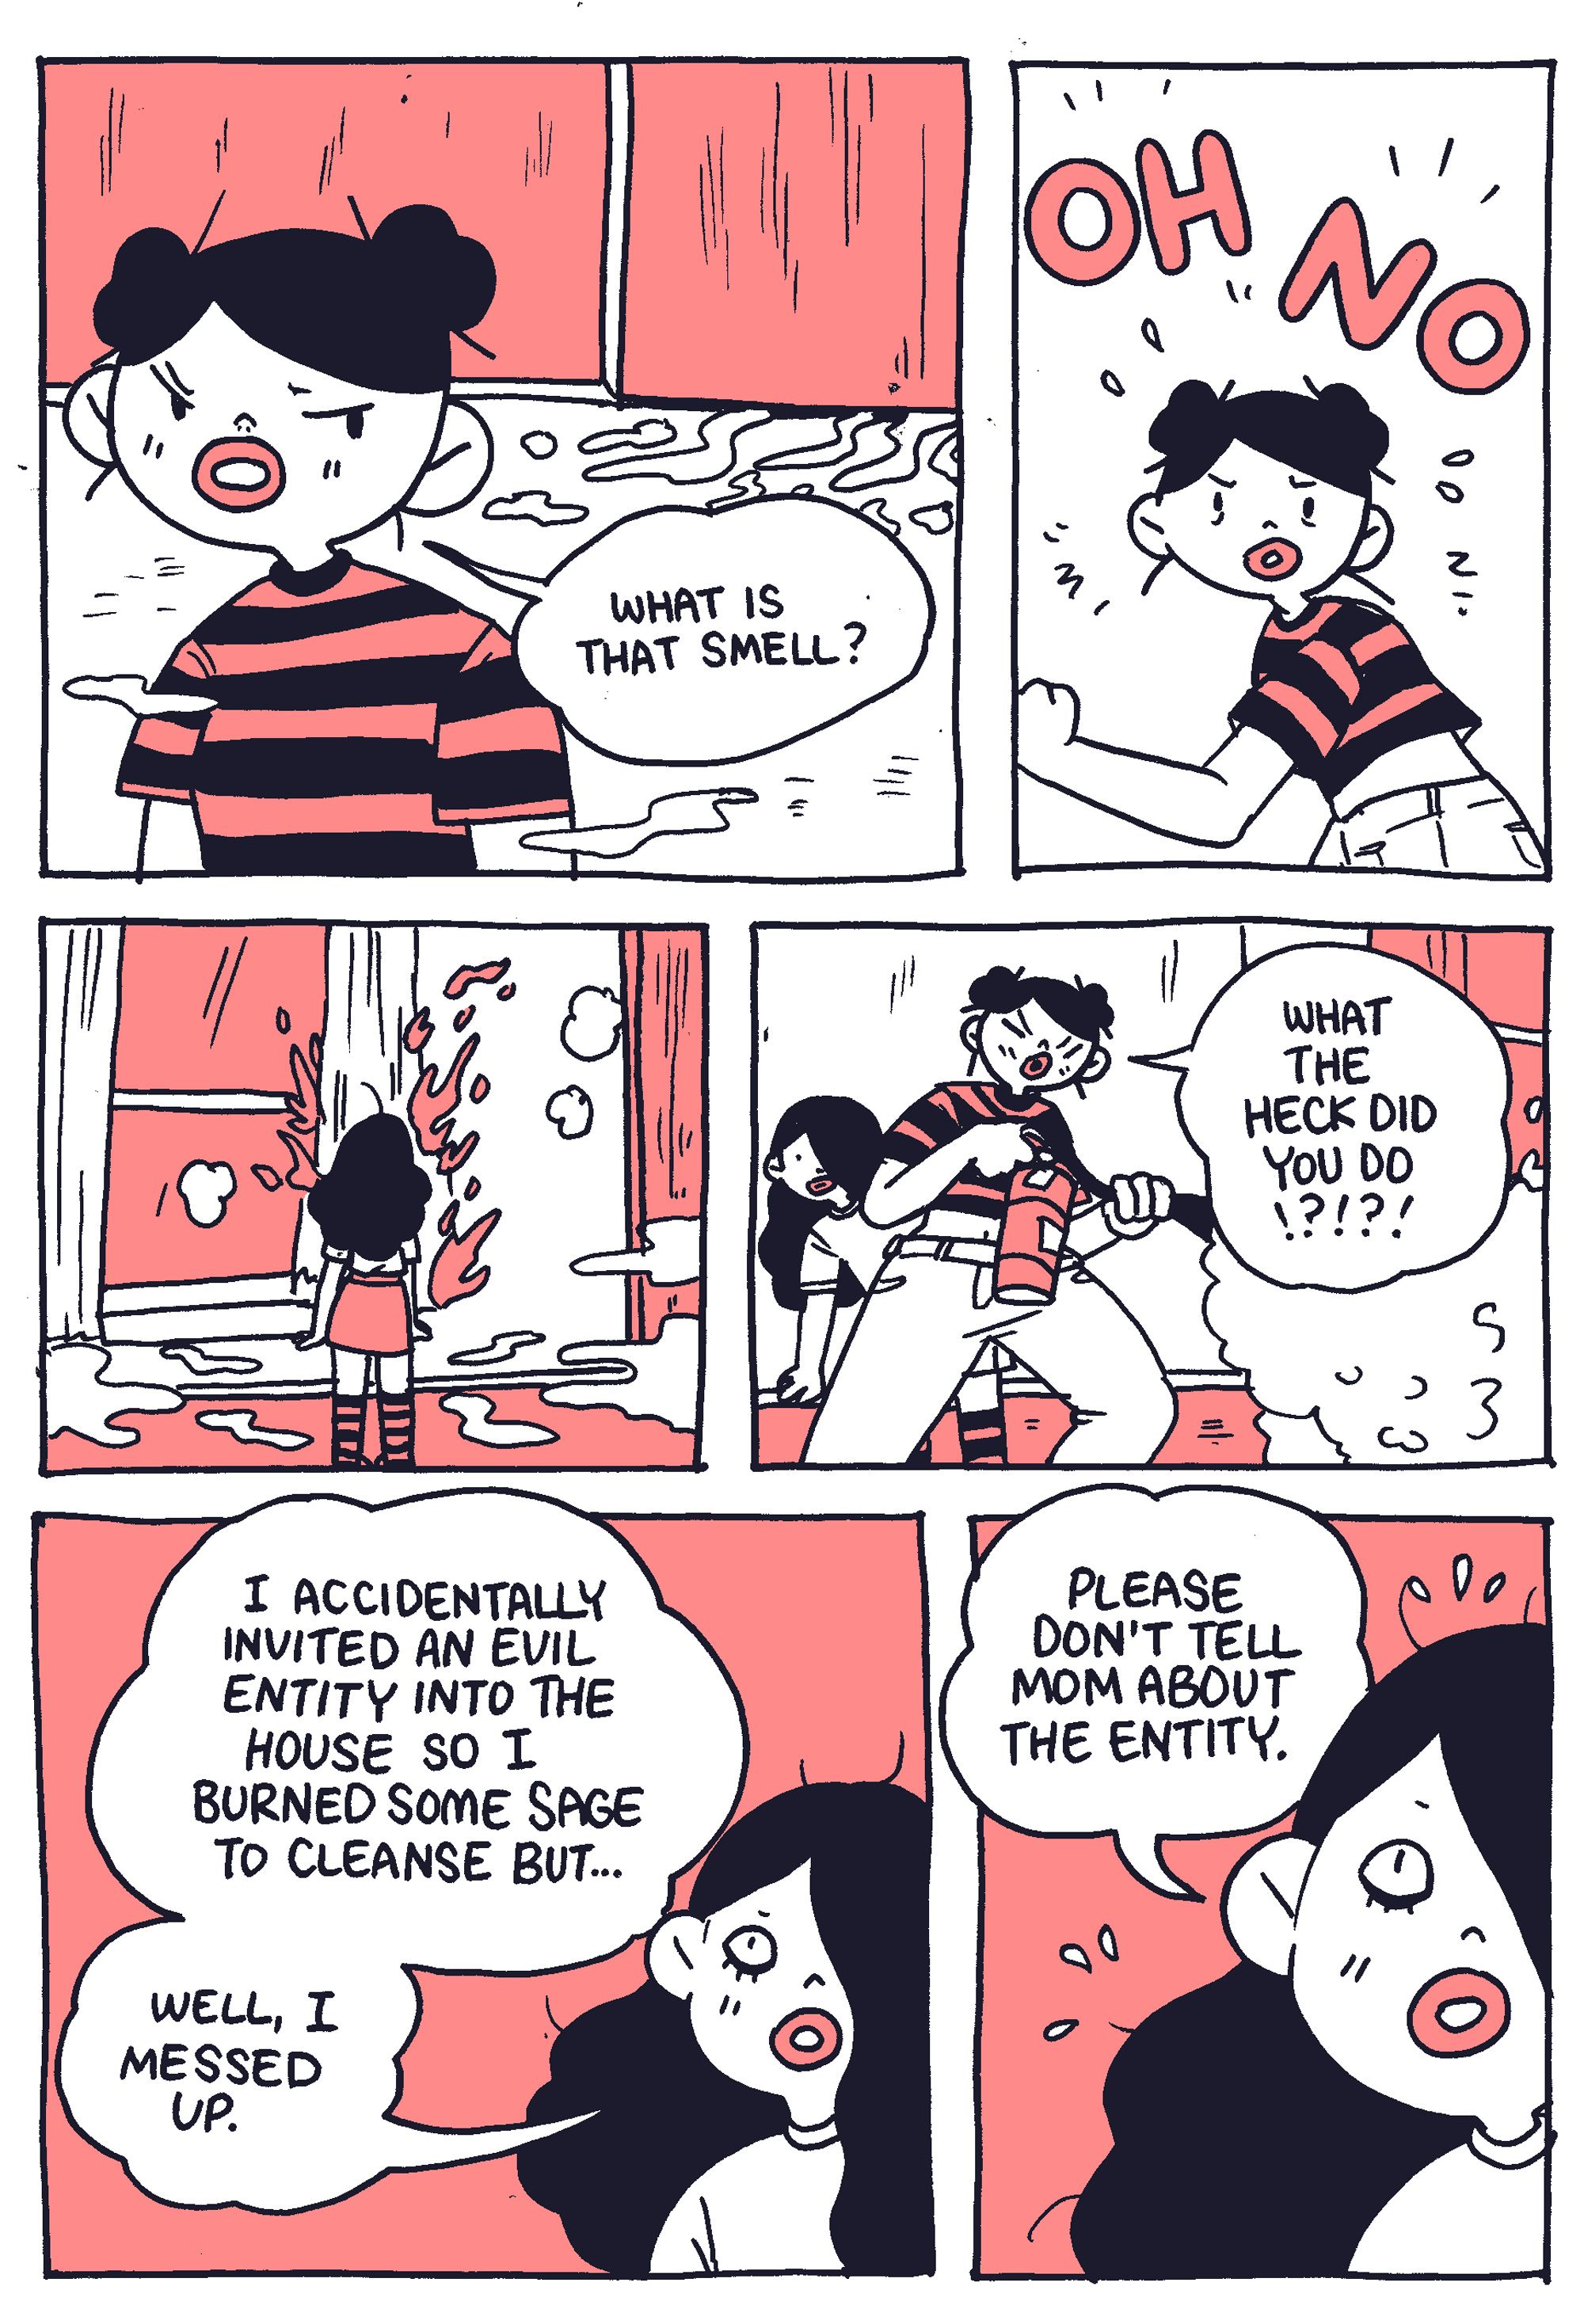 Junebug's Seance,' Today's Comic by Benji Nate | Comic 